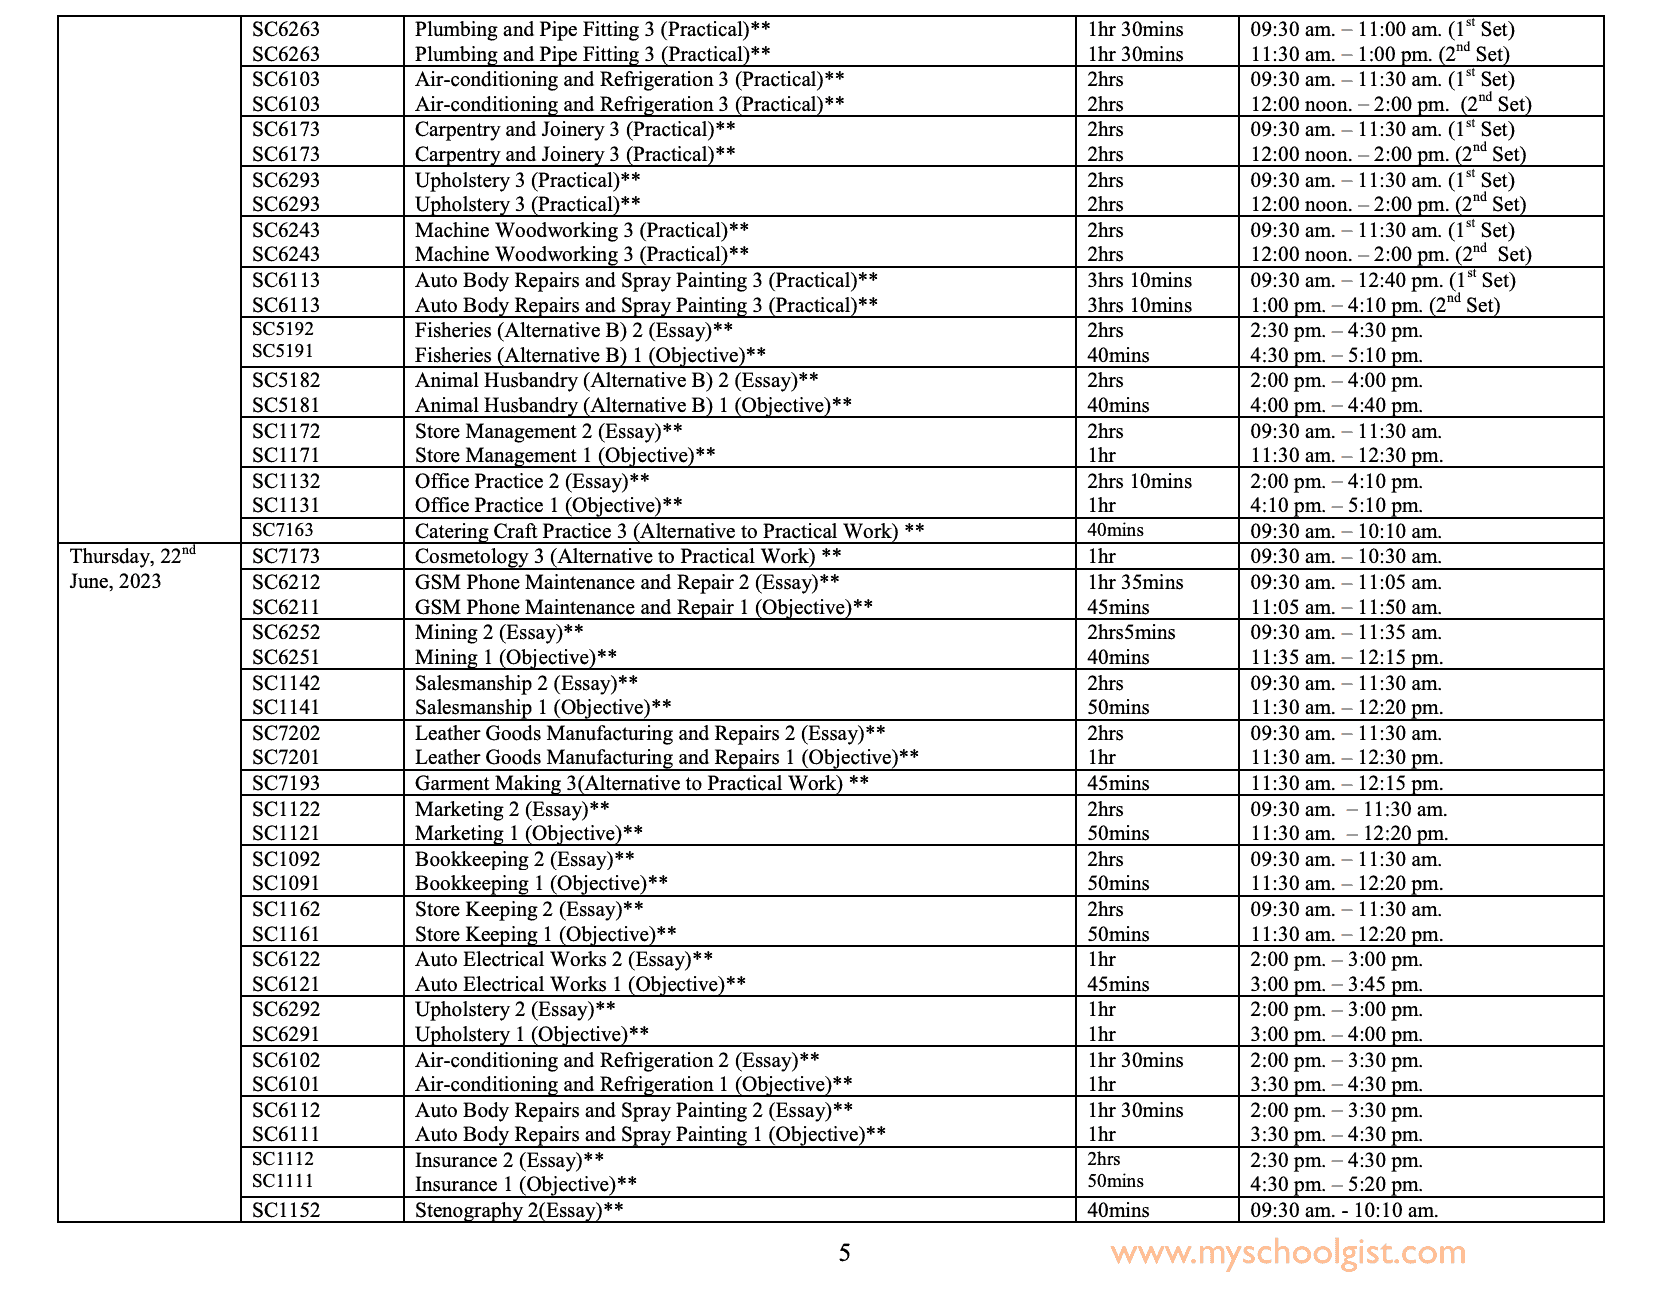 WAEC Timetable 2023 - Final